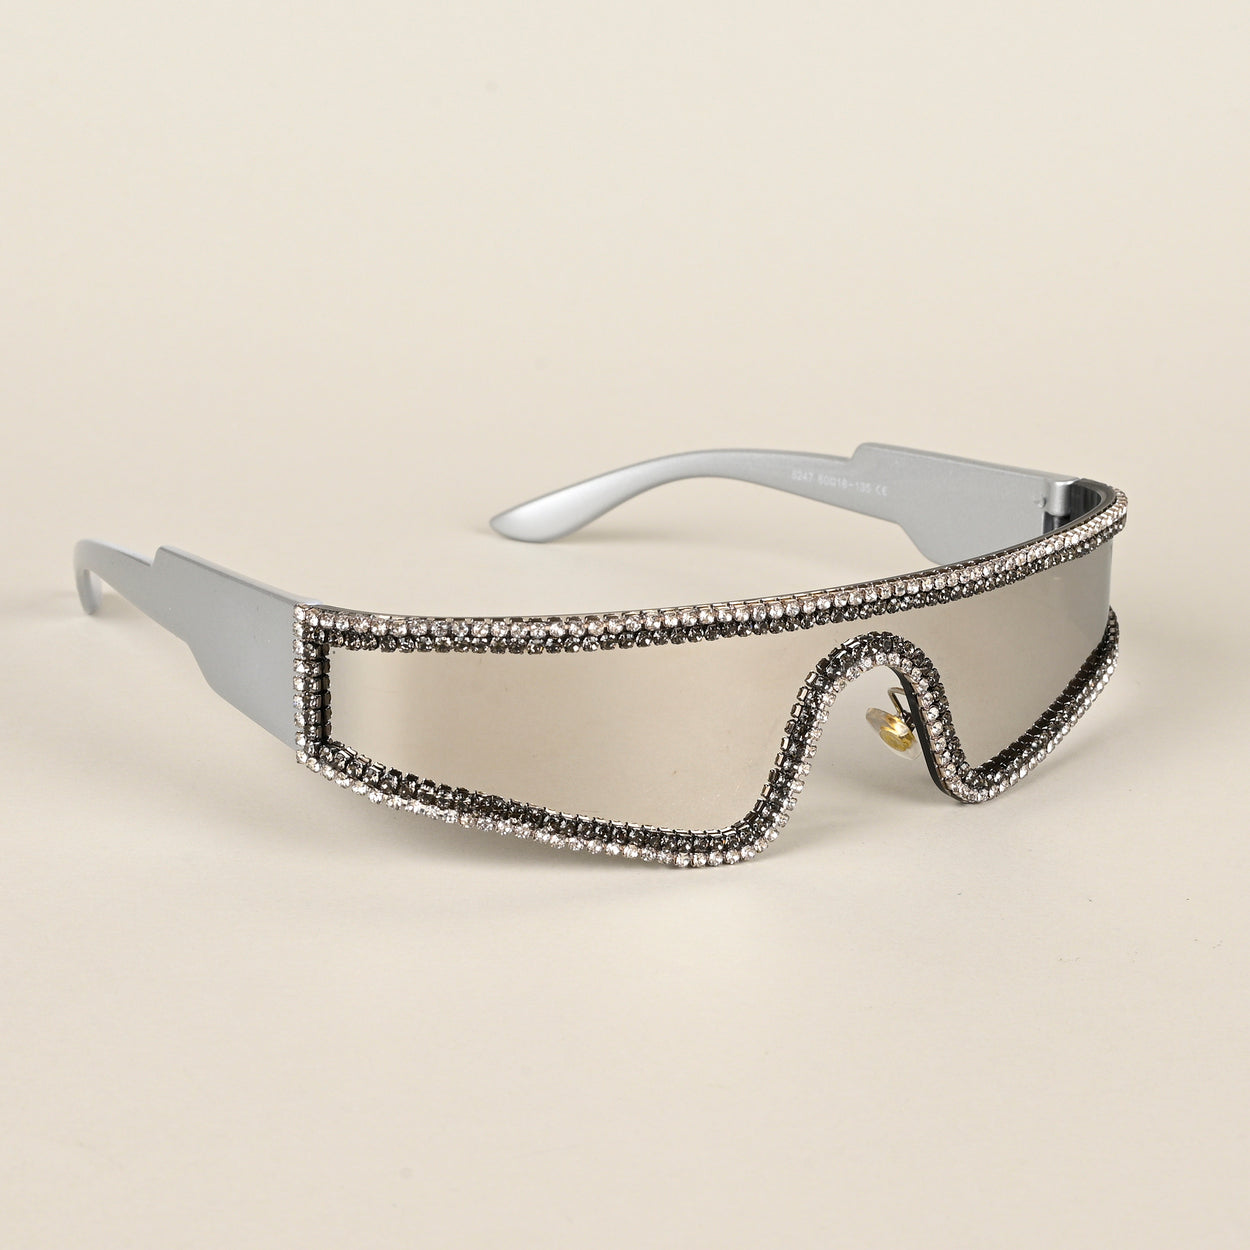 Wrap Around Sunglasses: Eye Protection in Style | Zenni Optical Blog